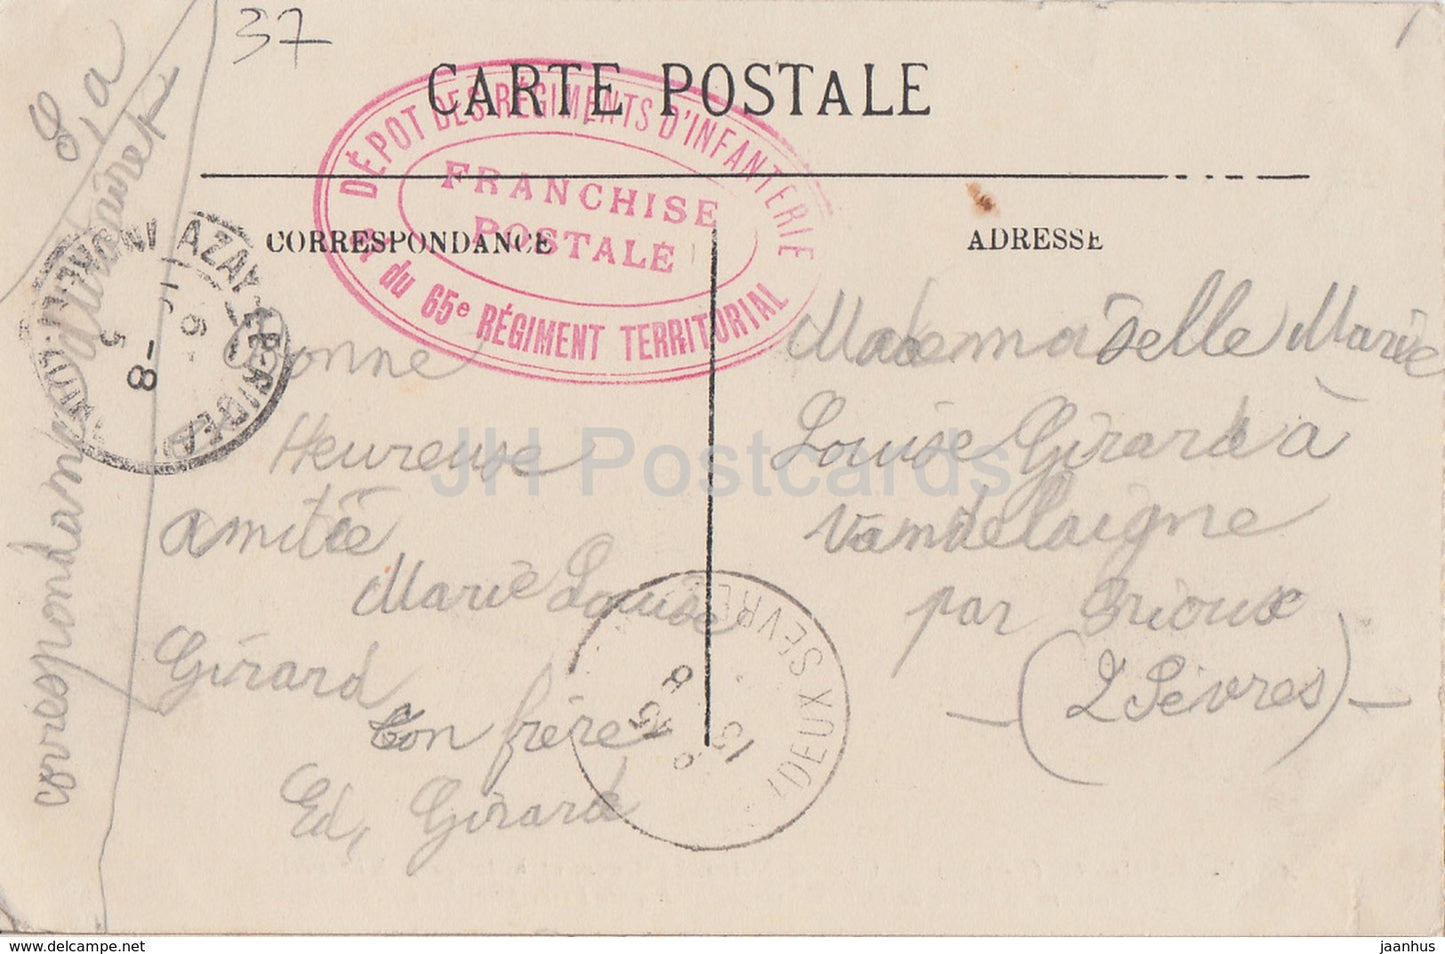 Azay Le Rideau - Chateau National - Facade Principale - Franchise Postale - Regiment - 27 - old postcard - France - used